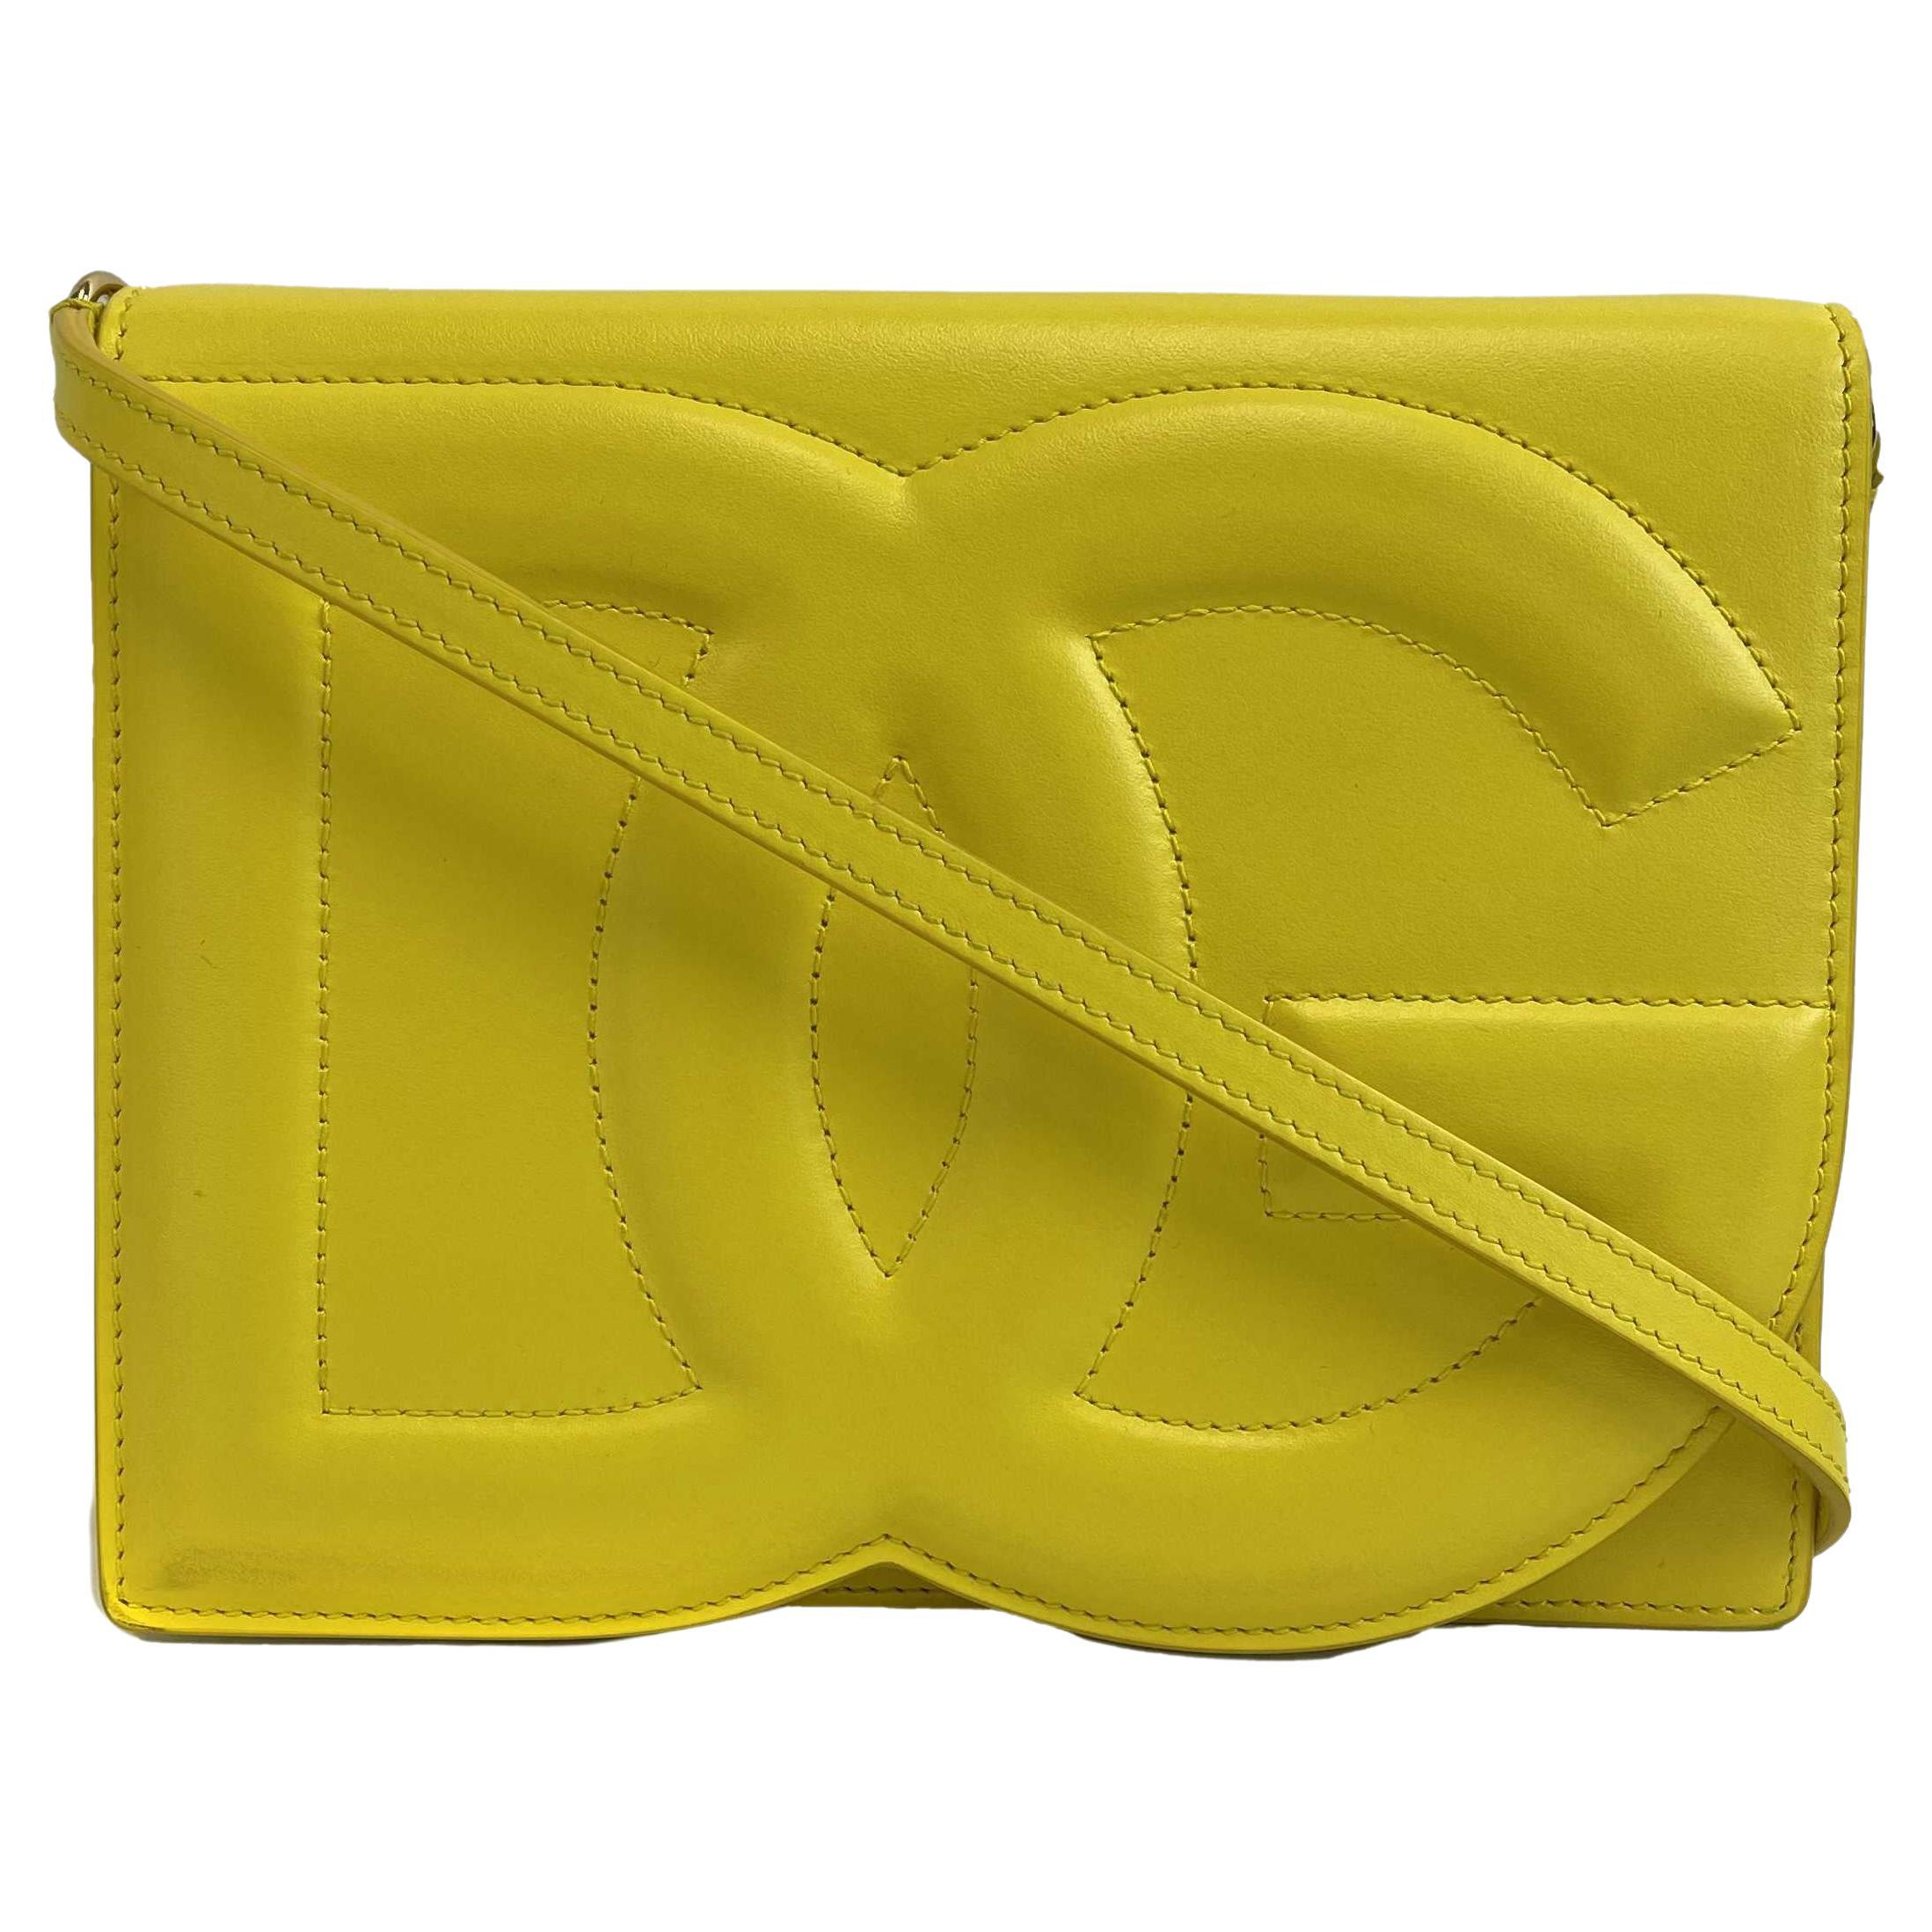 	Dolce & Gabbana - NEW DG Logo Yellow Crossbody / Shoulder Bag